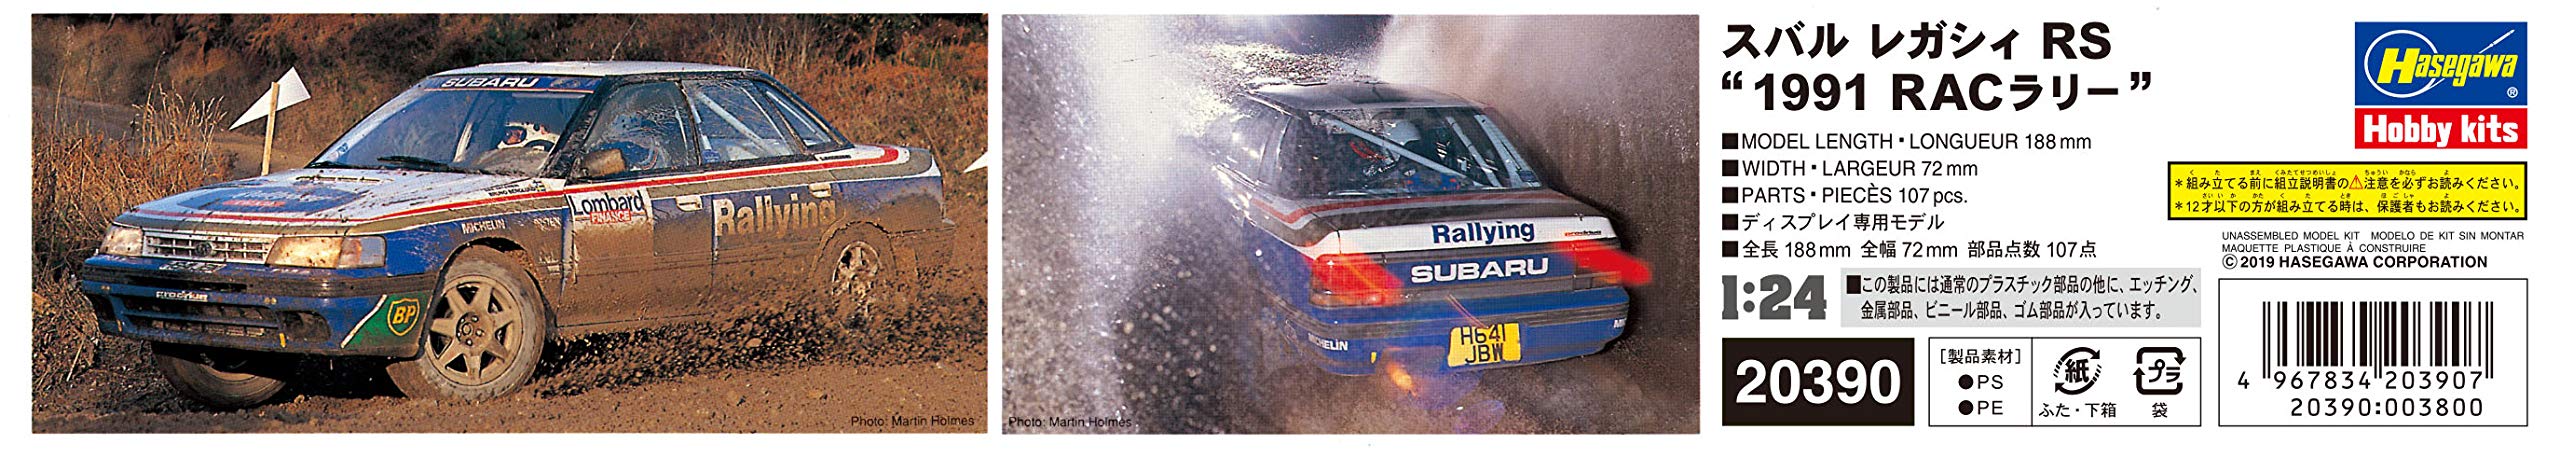 HASEGAWA 20390 Subaru Legacy Rs 1991 Rac Rally Bausatz im Maßstab 1/24